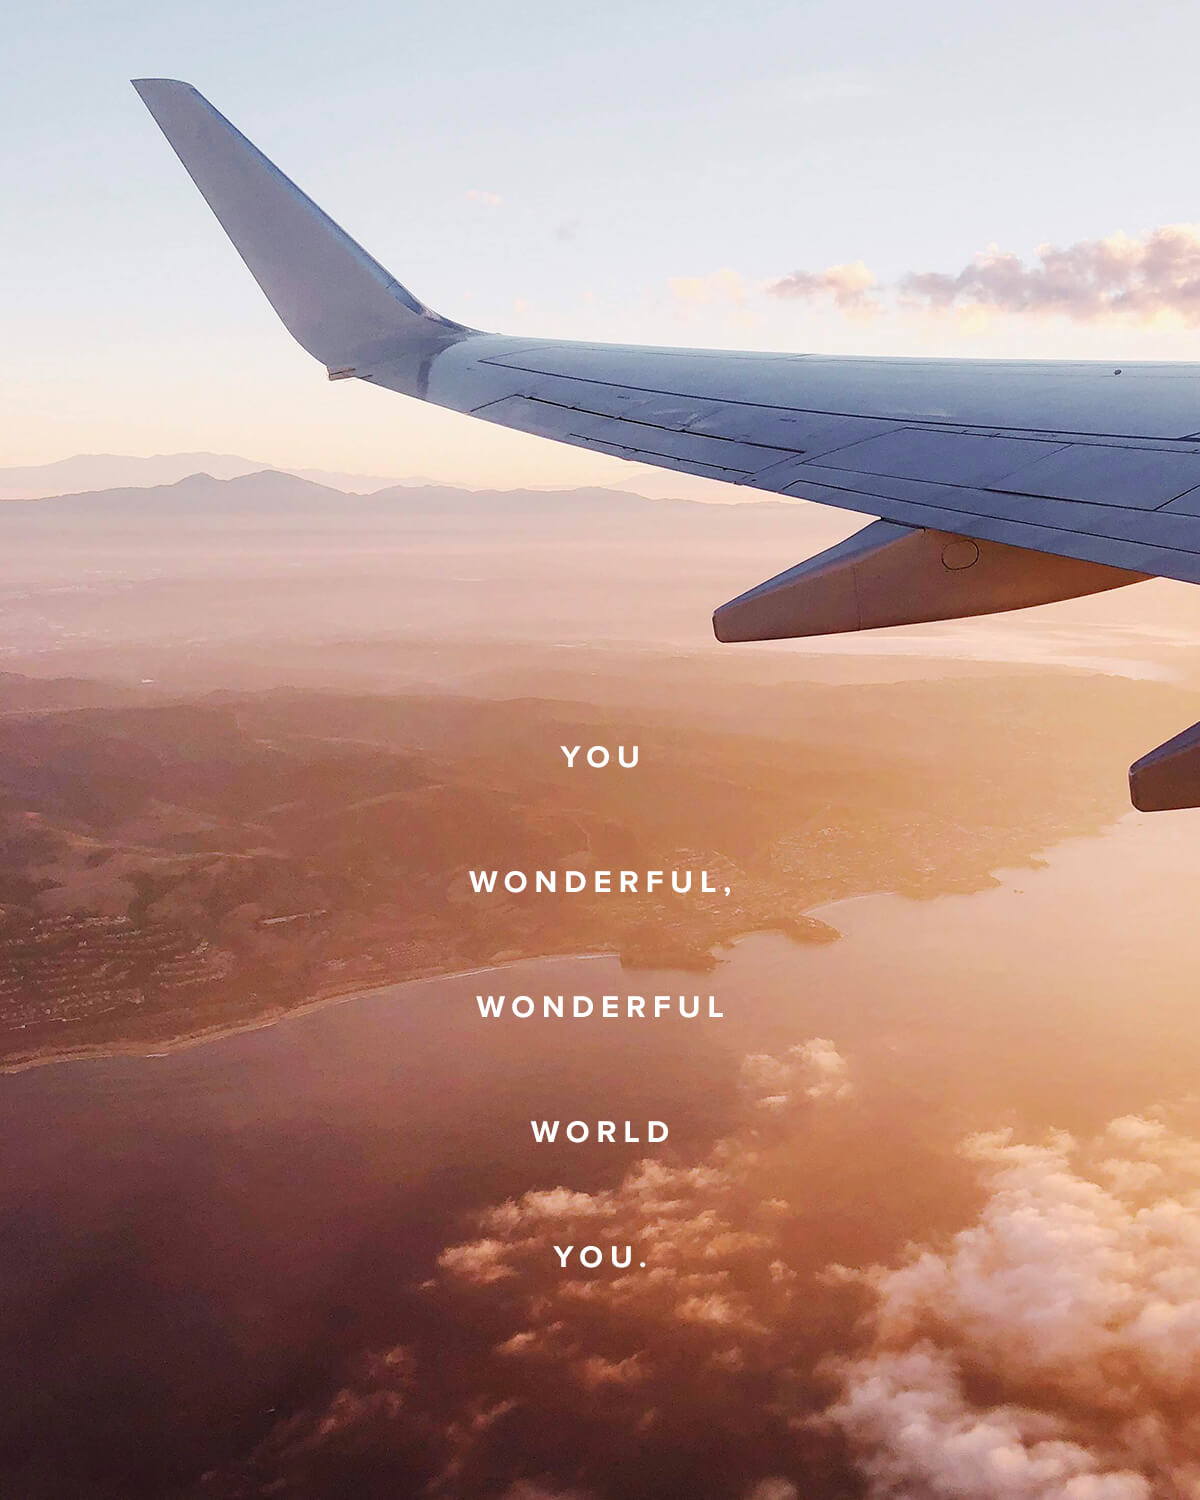 You wonderful, wonderful world you